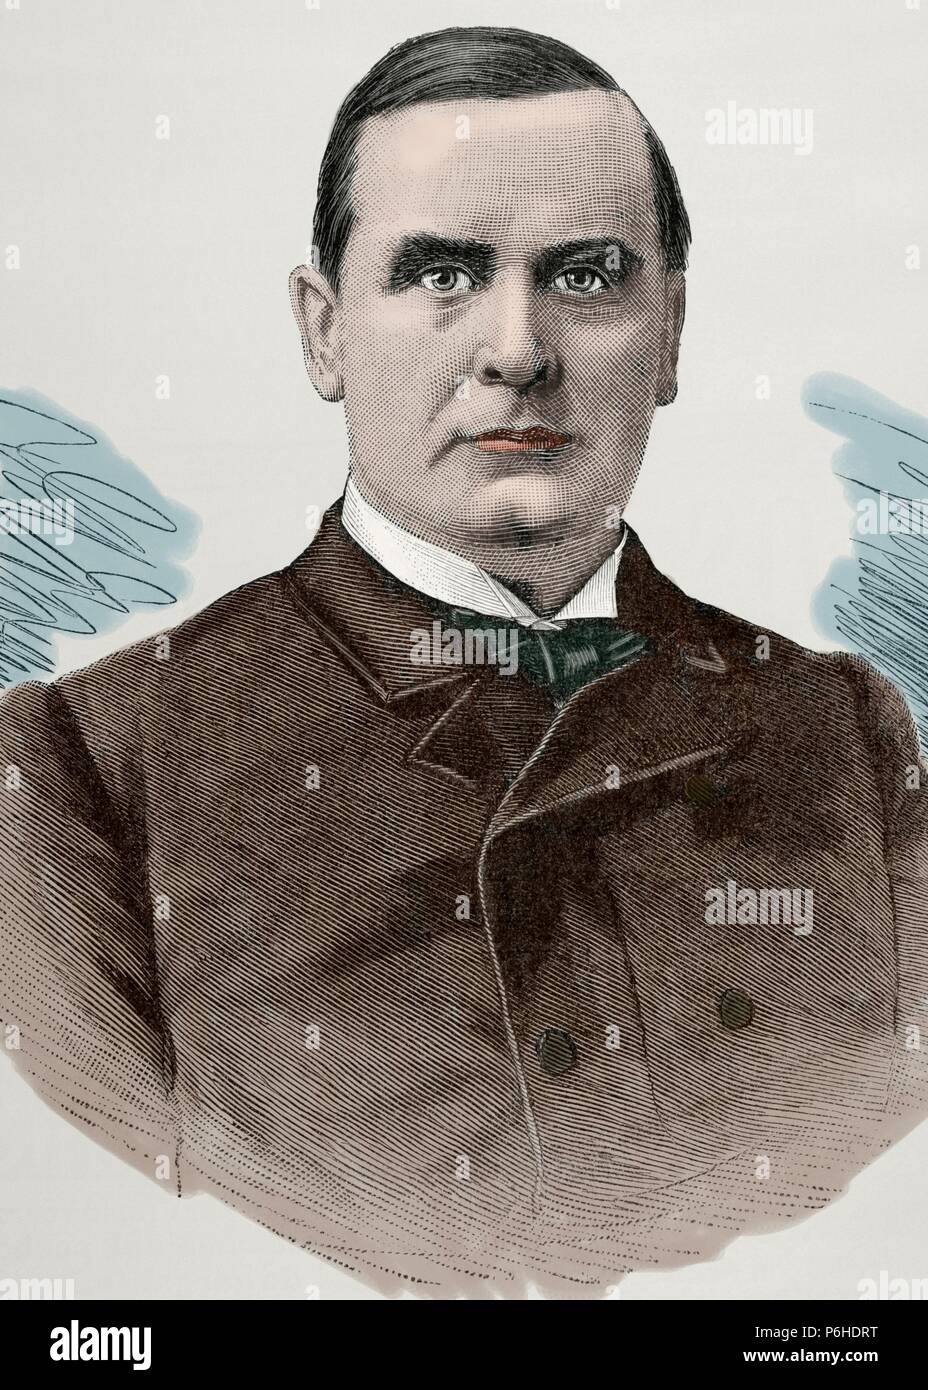 William McKinley (1843 -1901).  25th President of the United States. Colored engraving. La Ilustracion Espanola y Americana, 1890. Stock Photo